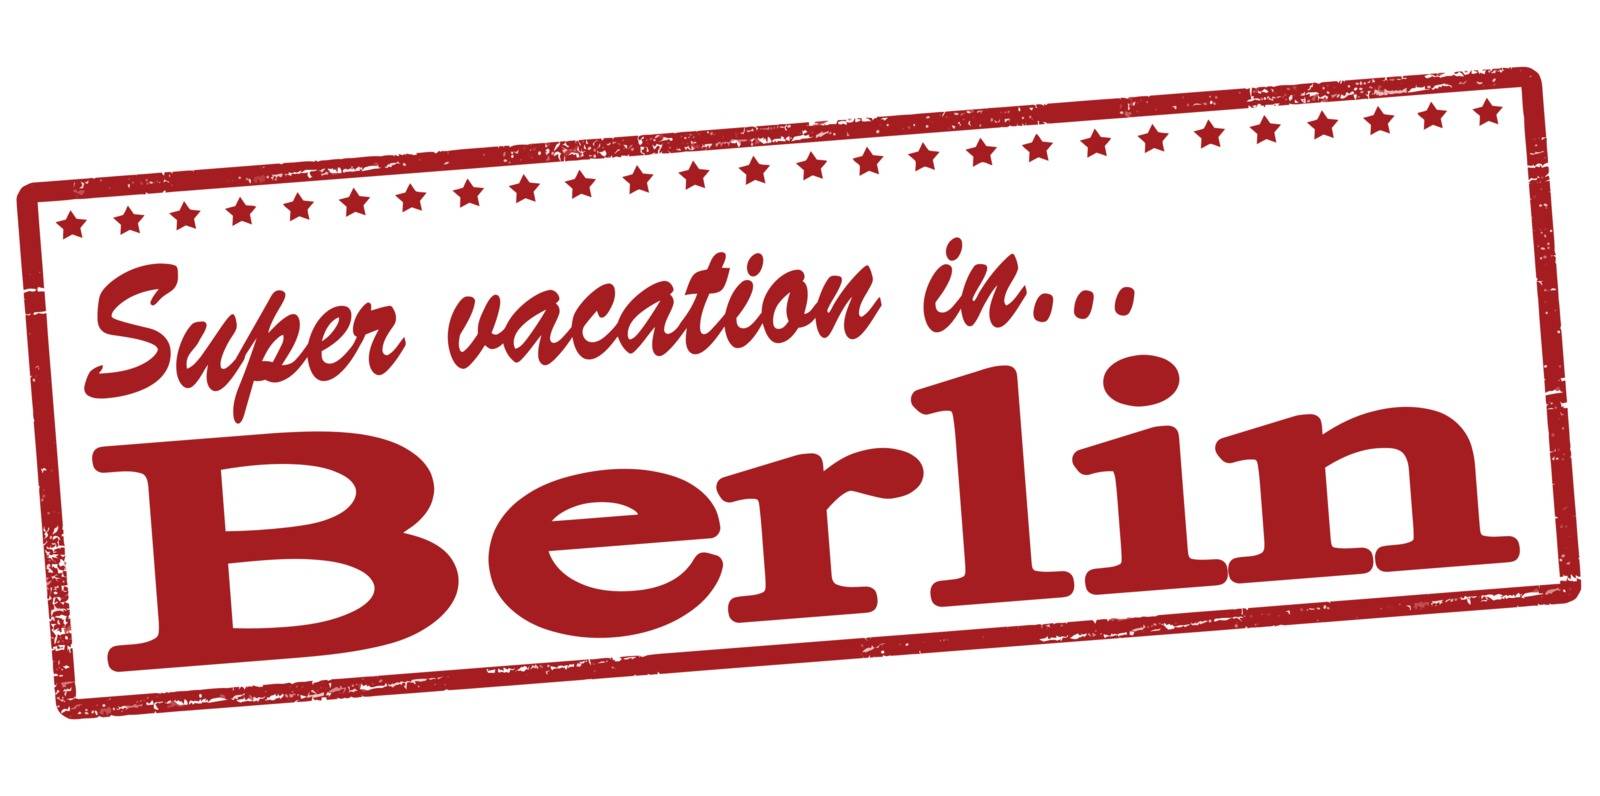 Super vacation in Berlin by carmenbobo